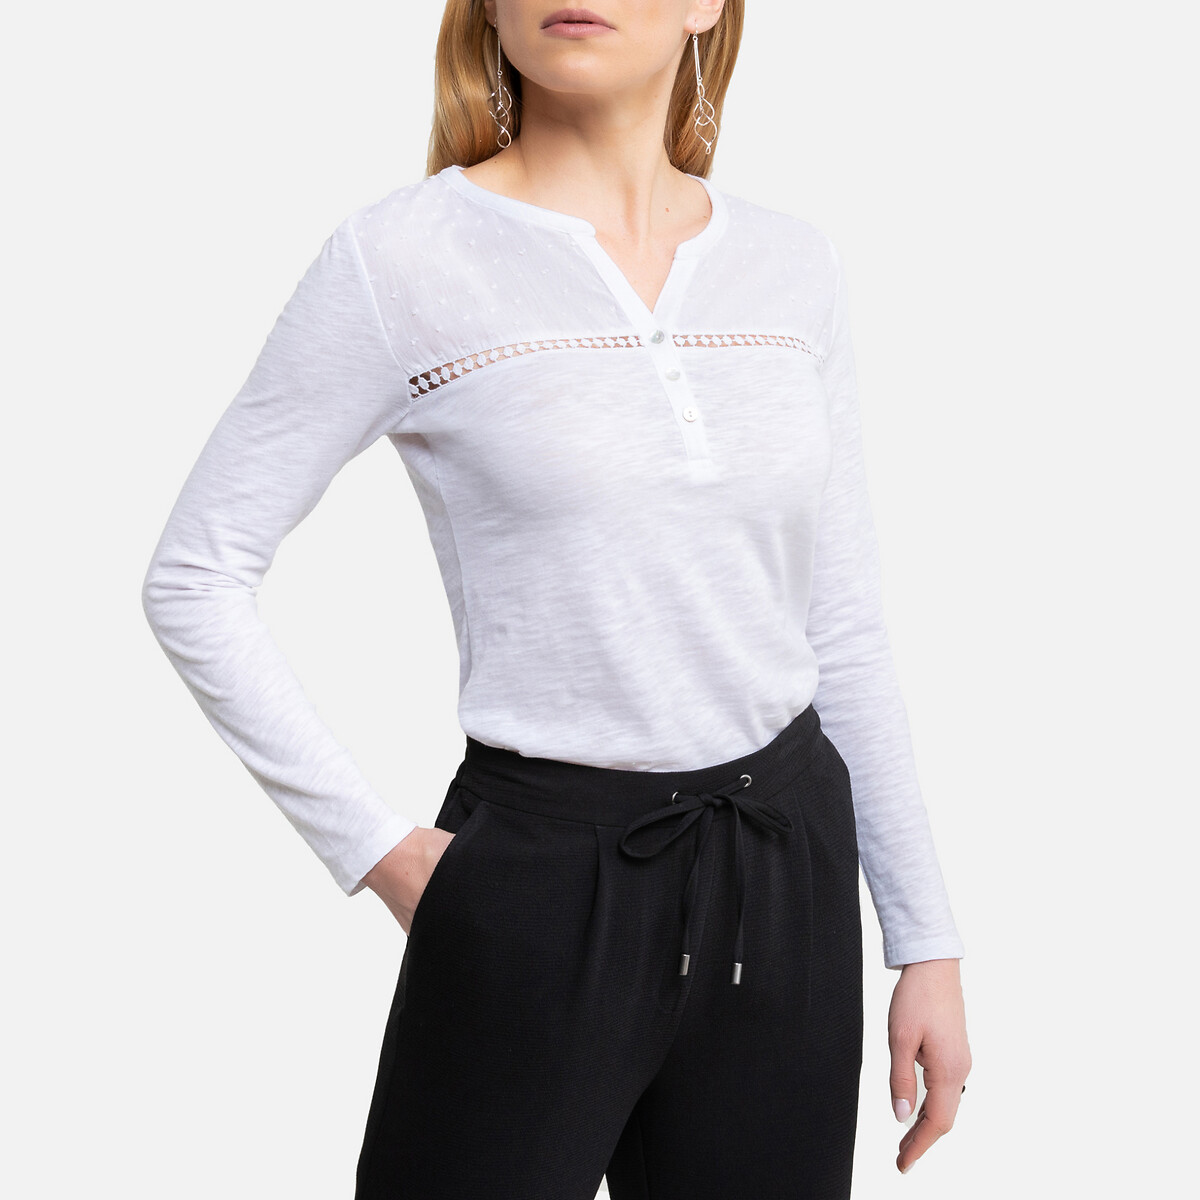 Kiabi blouse discount 77% White 40                  EU WOMEN FASHION Shirts & T-shirts Lace 